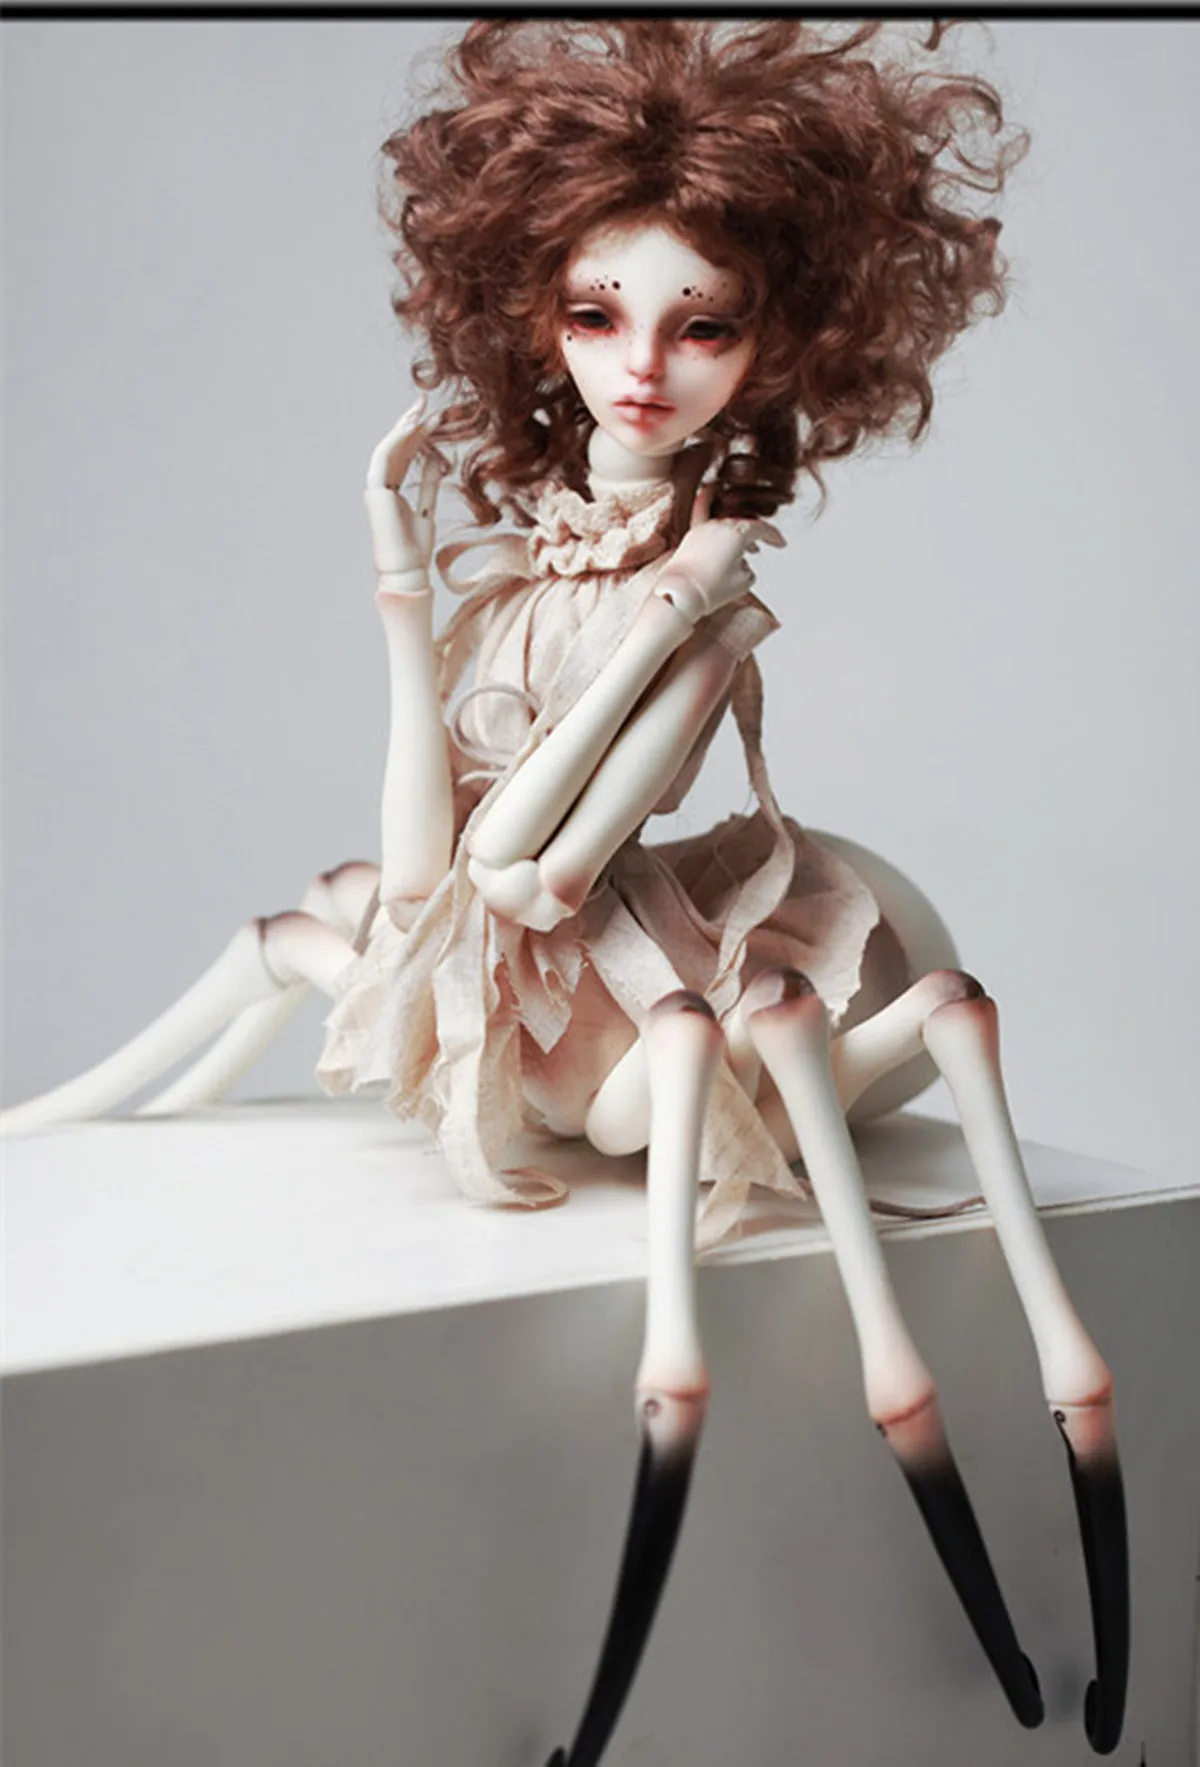 

New bjd sd free eyes 1/4 Doll Elizabeth spider body for sales not toys premium resin animal version spot makeup